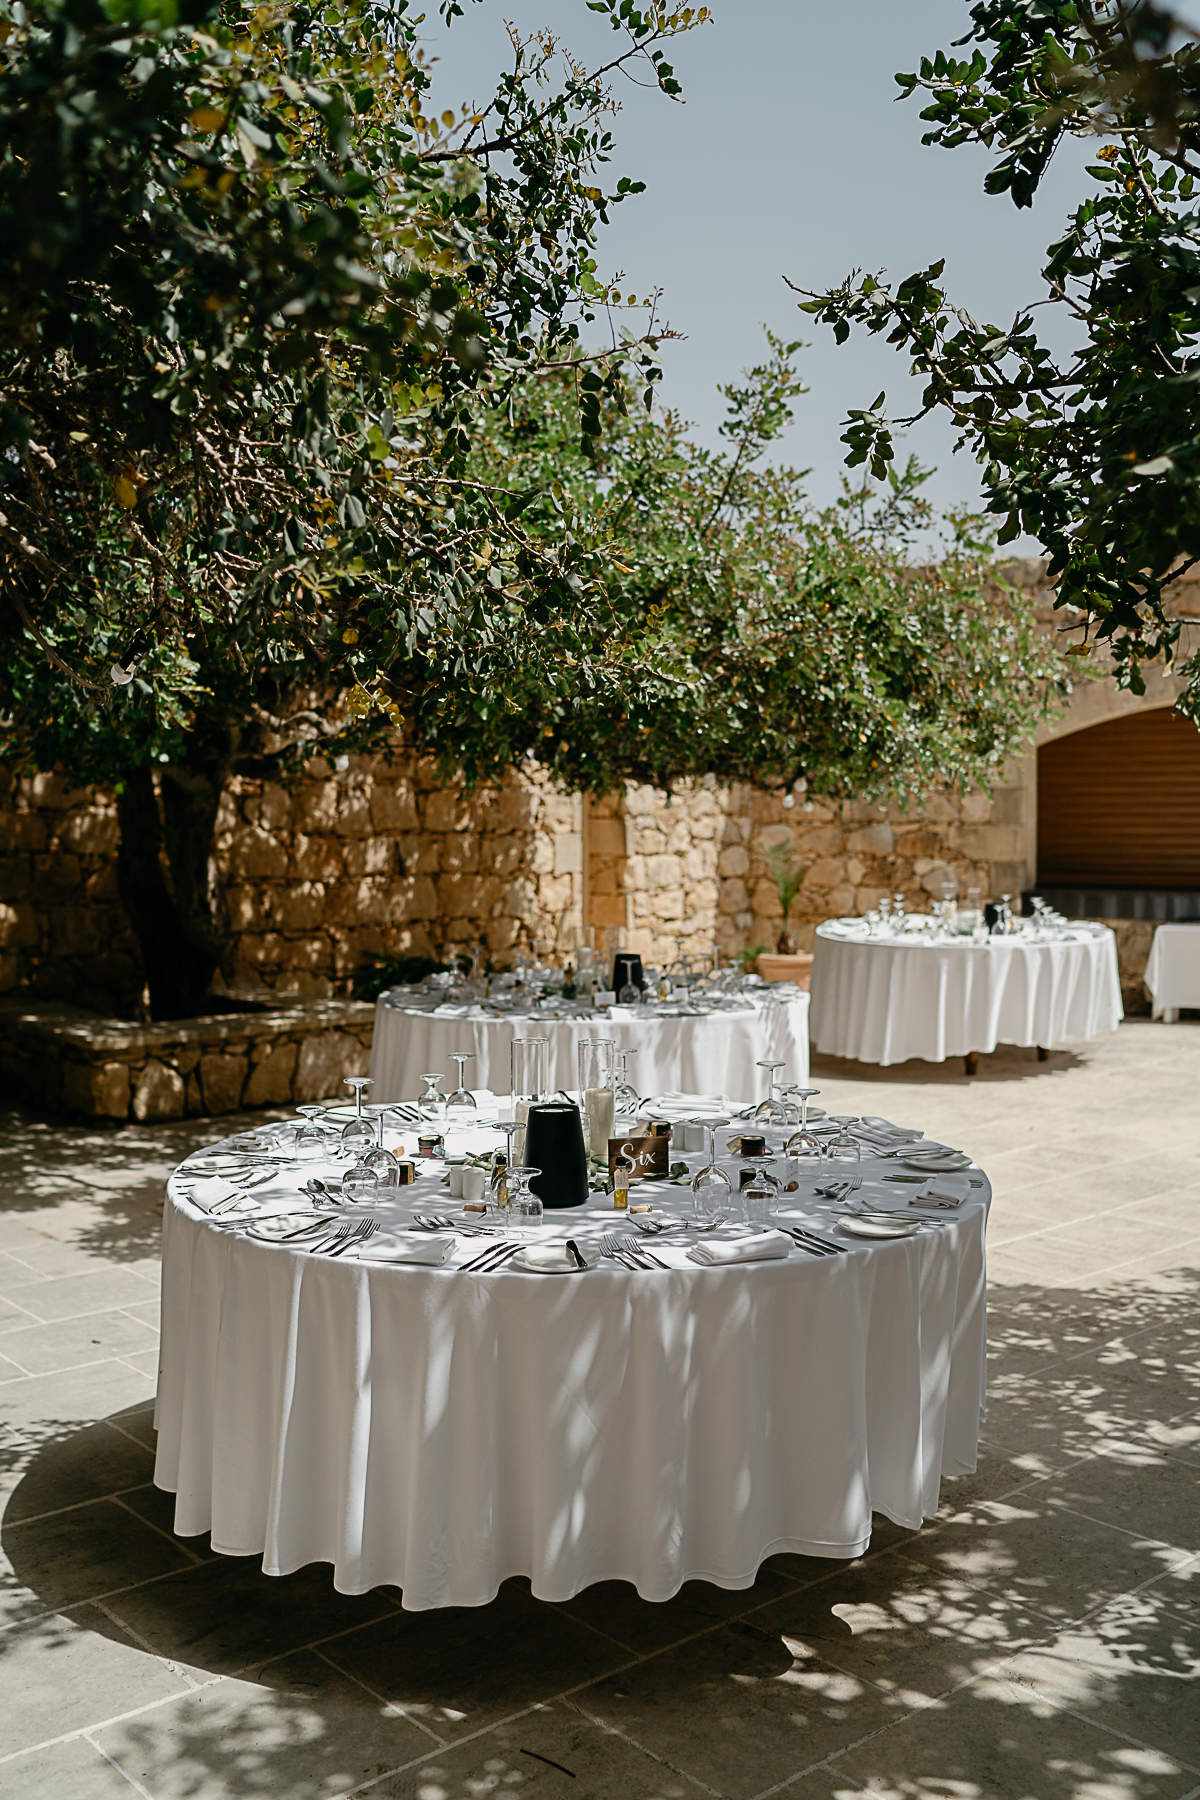 Ta' Cenc wedding table set up in the garden